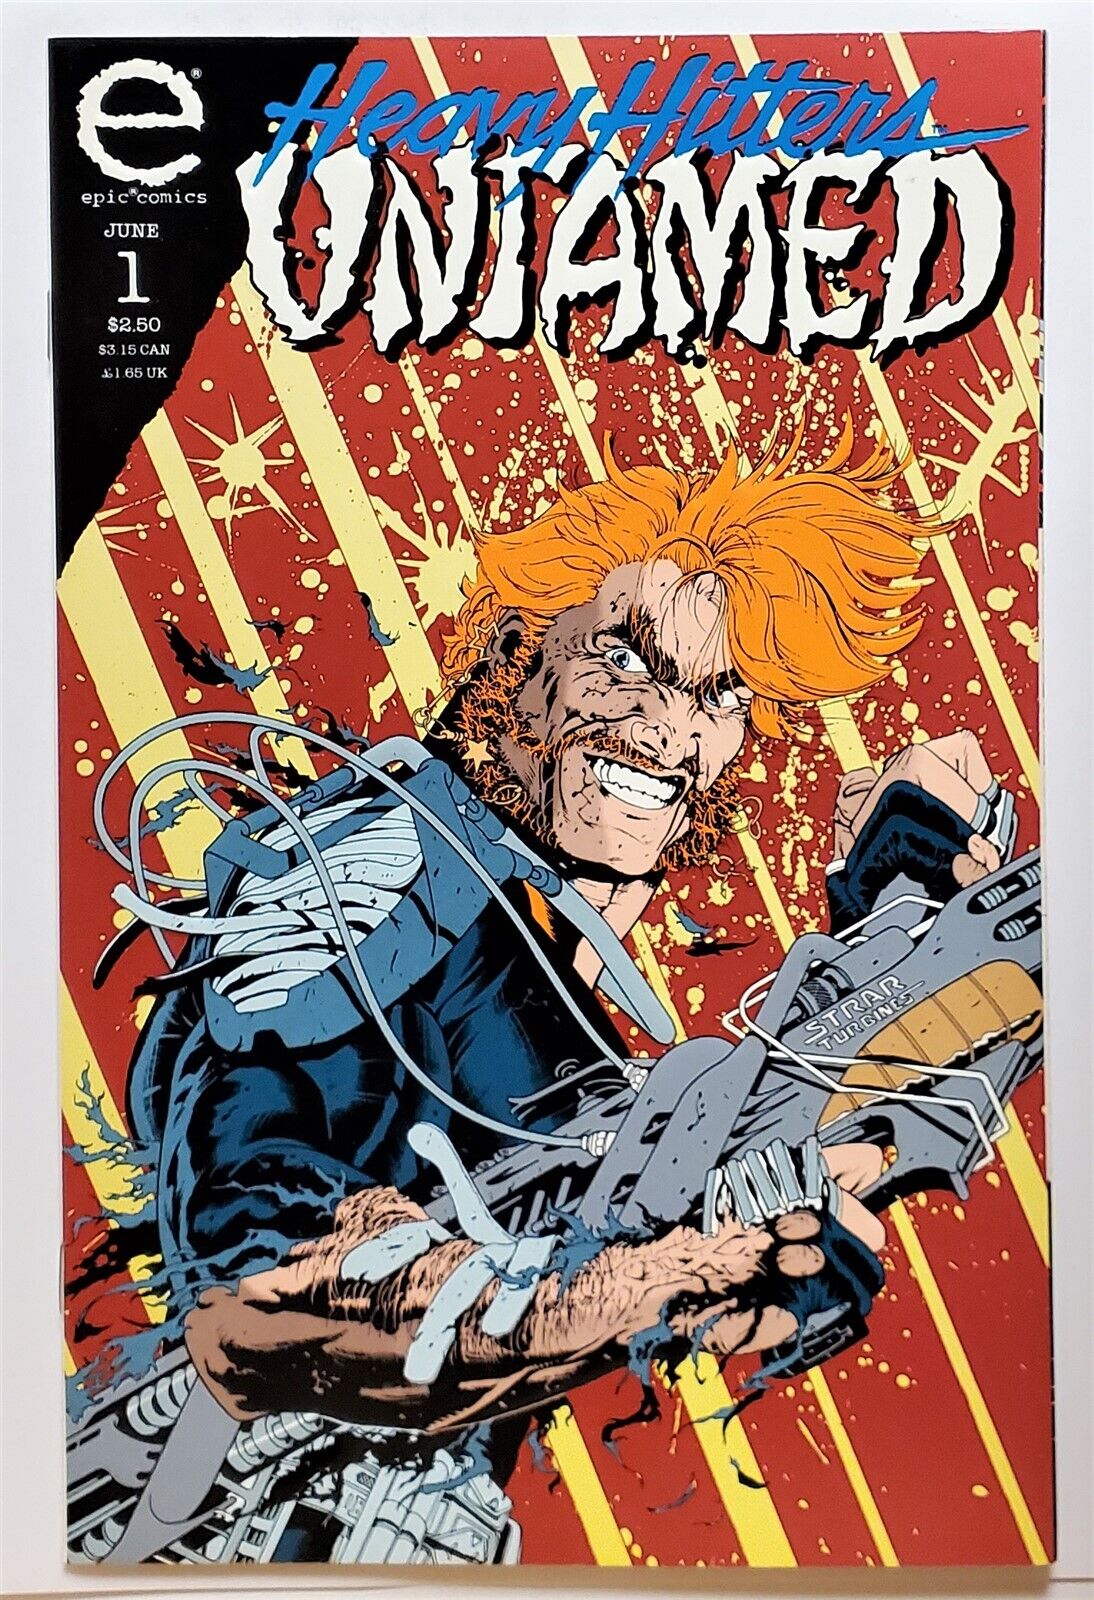 Untamed #1 (June 1993, Epic) VF/NM 